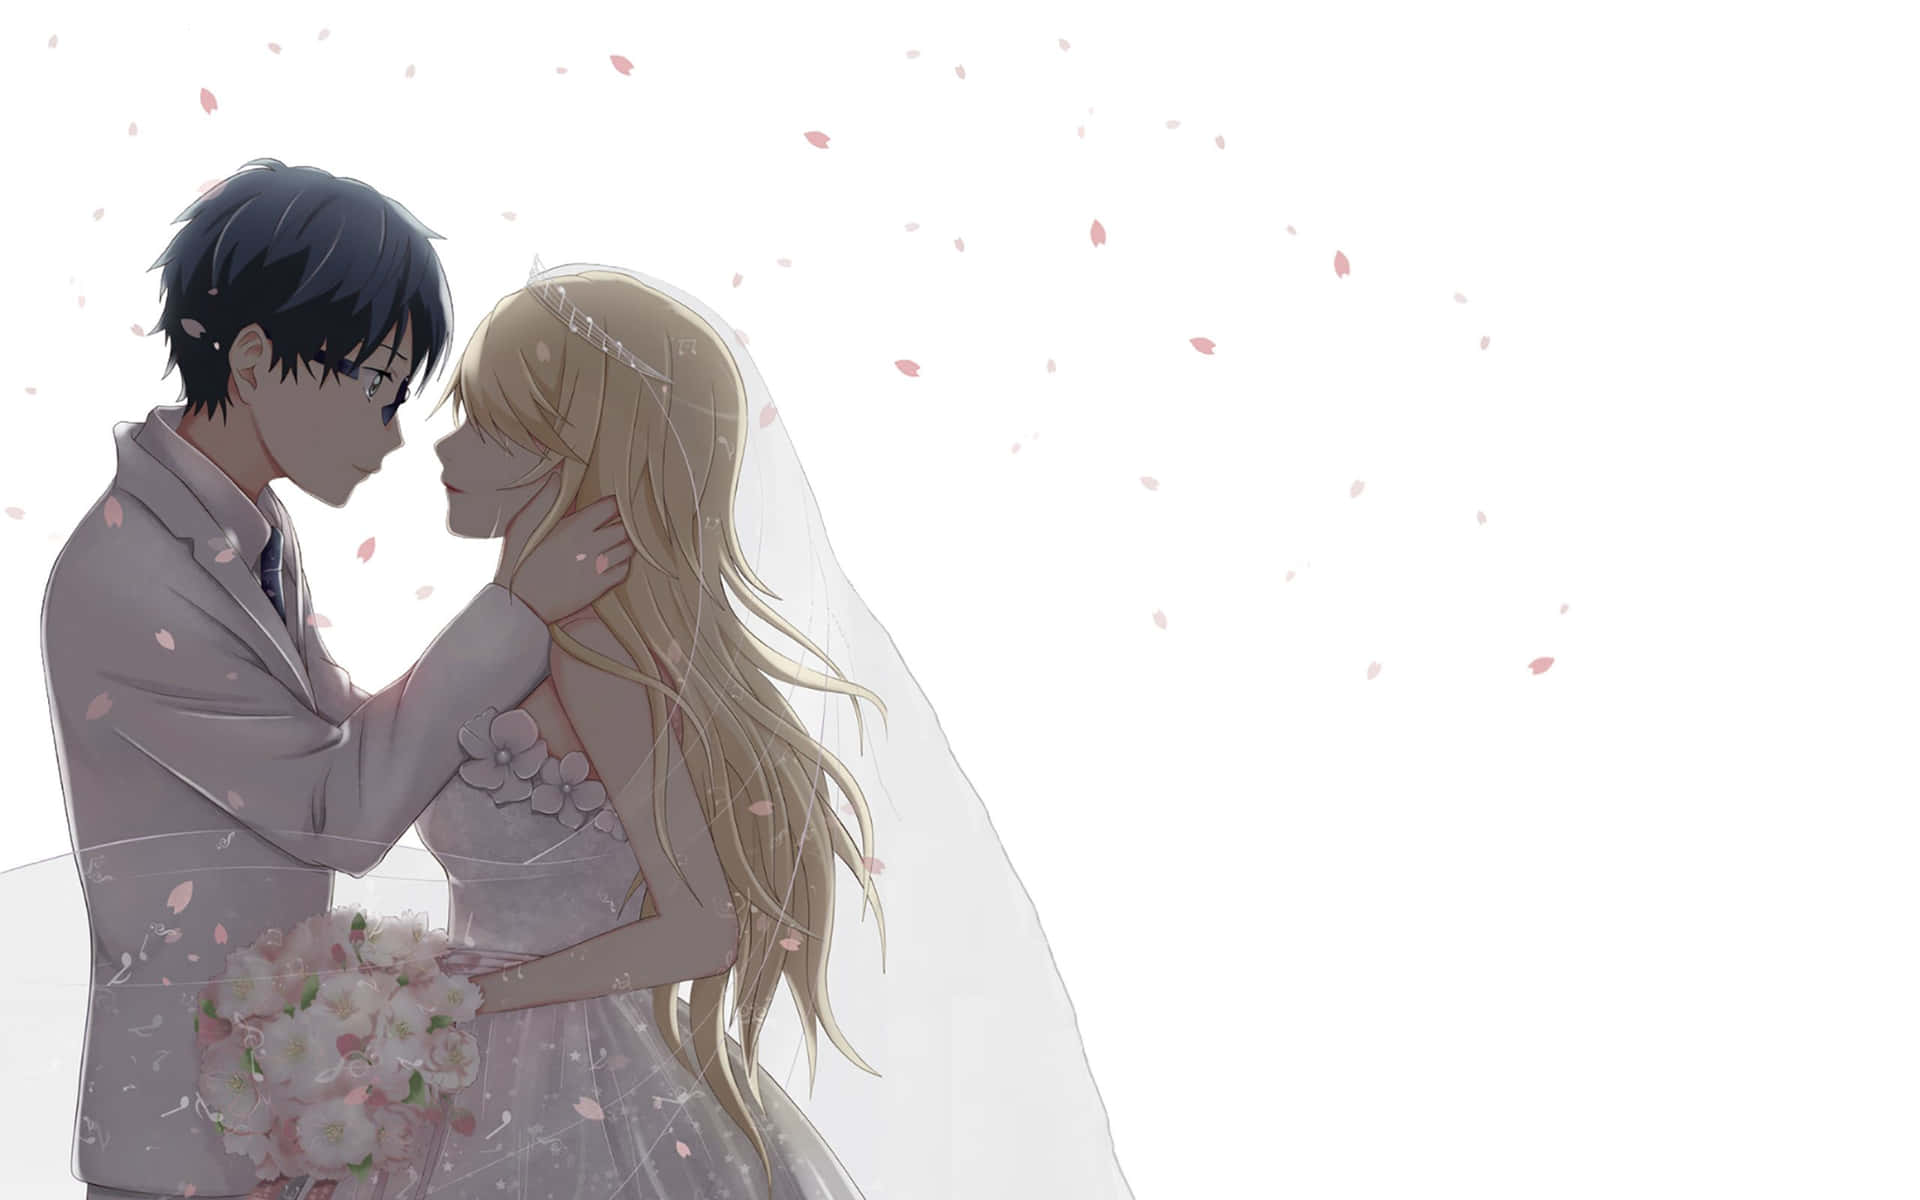 Imagensde Casal Anime Fofo Para Relacionamentos E Casamentos.